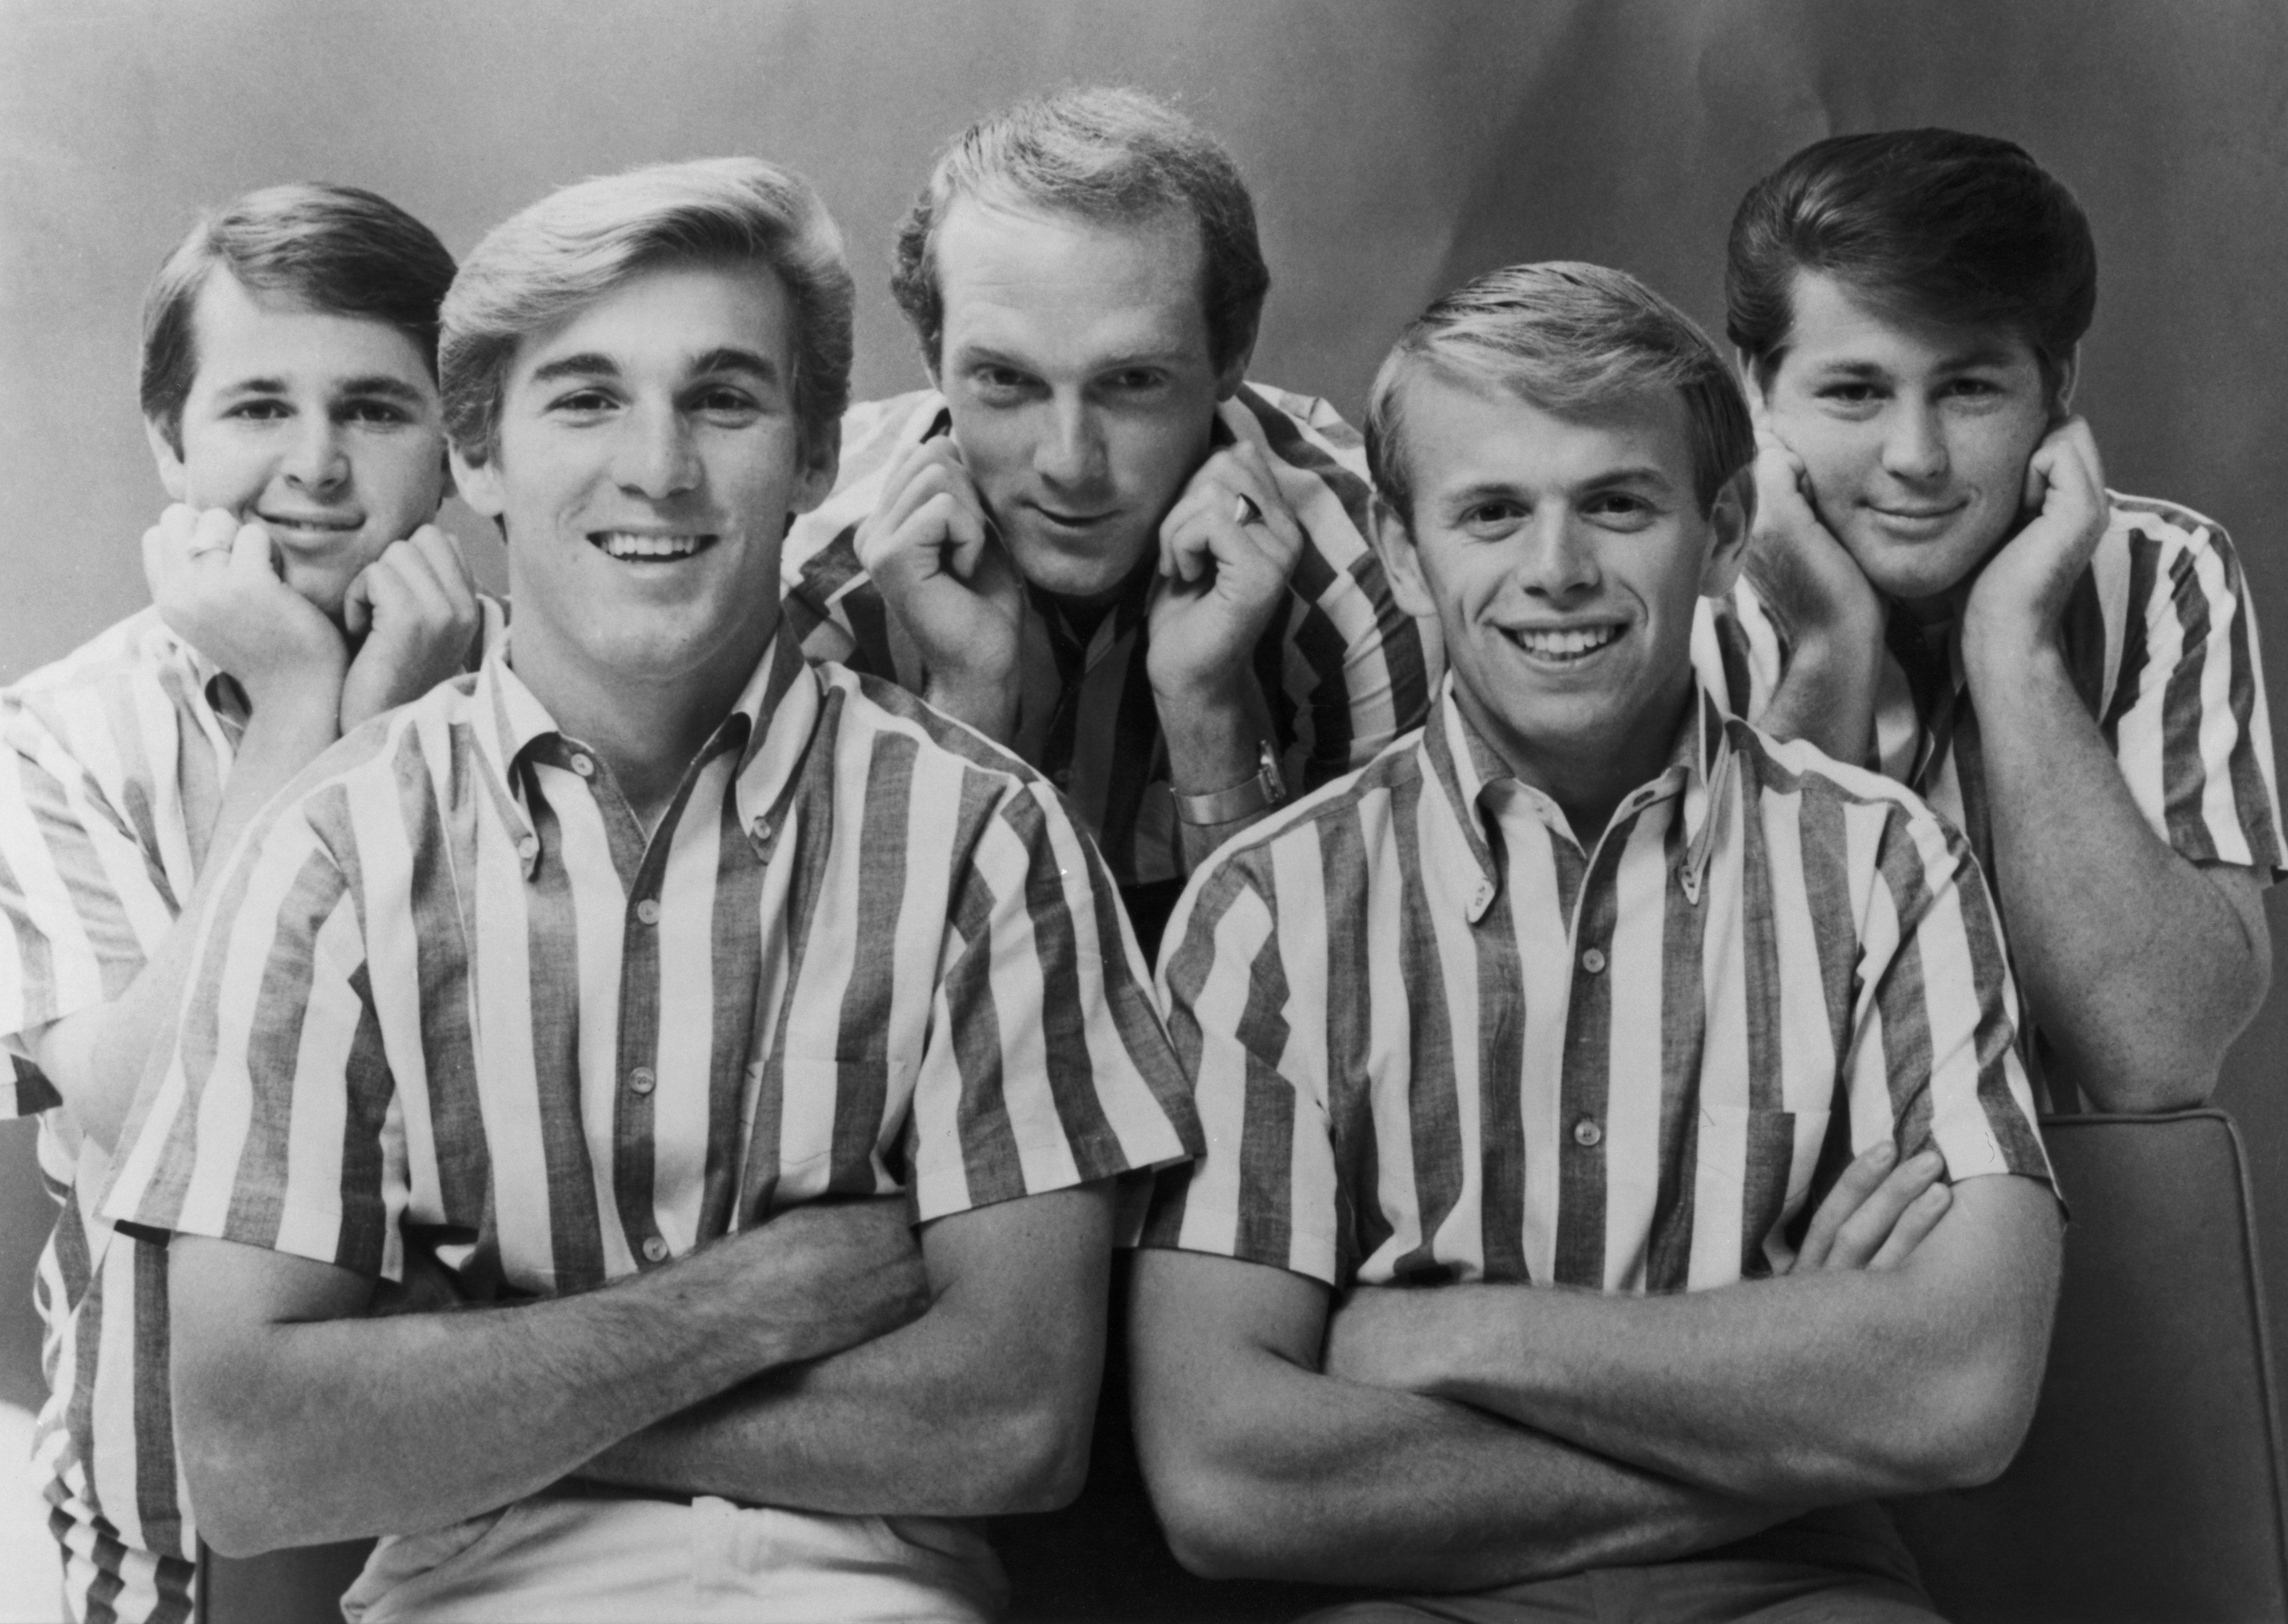 The Beach Boys wearing striped shirts